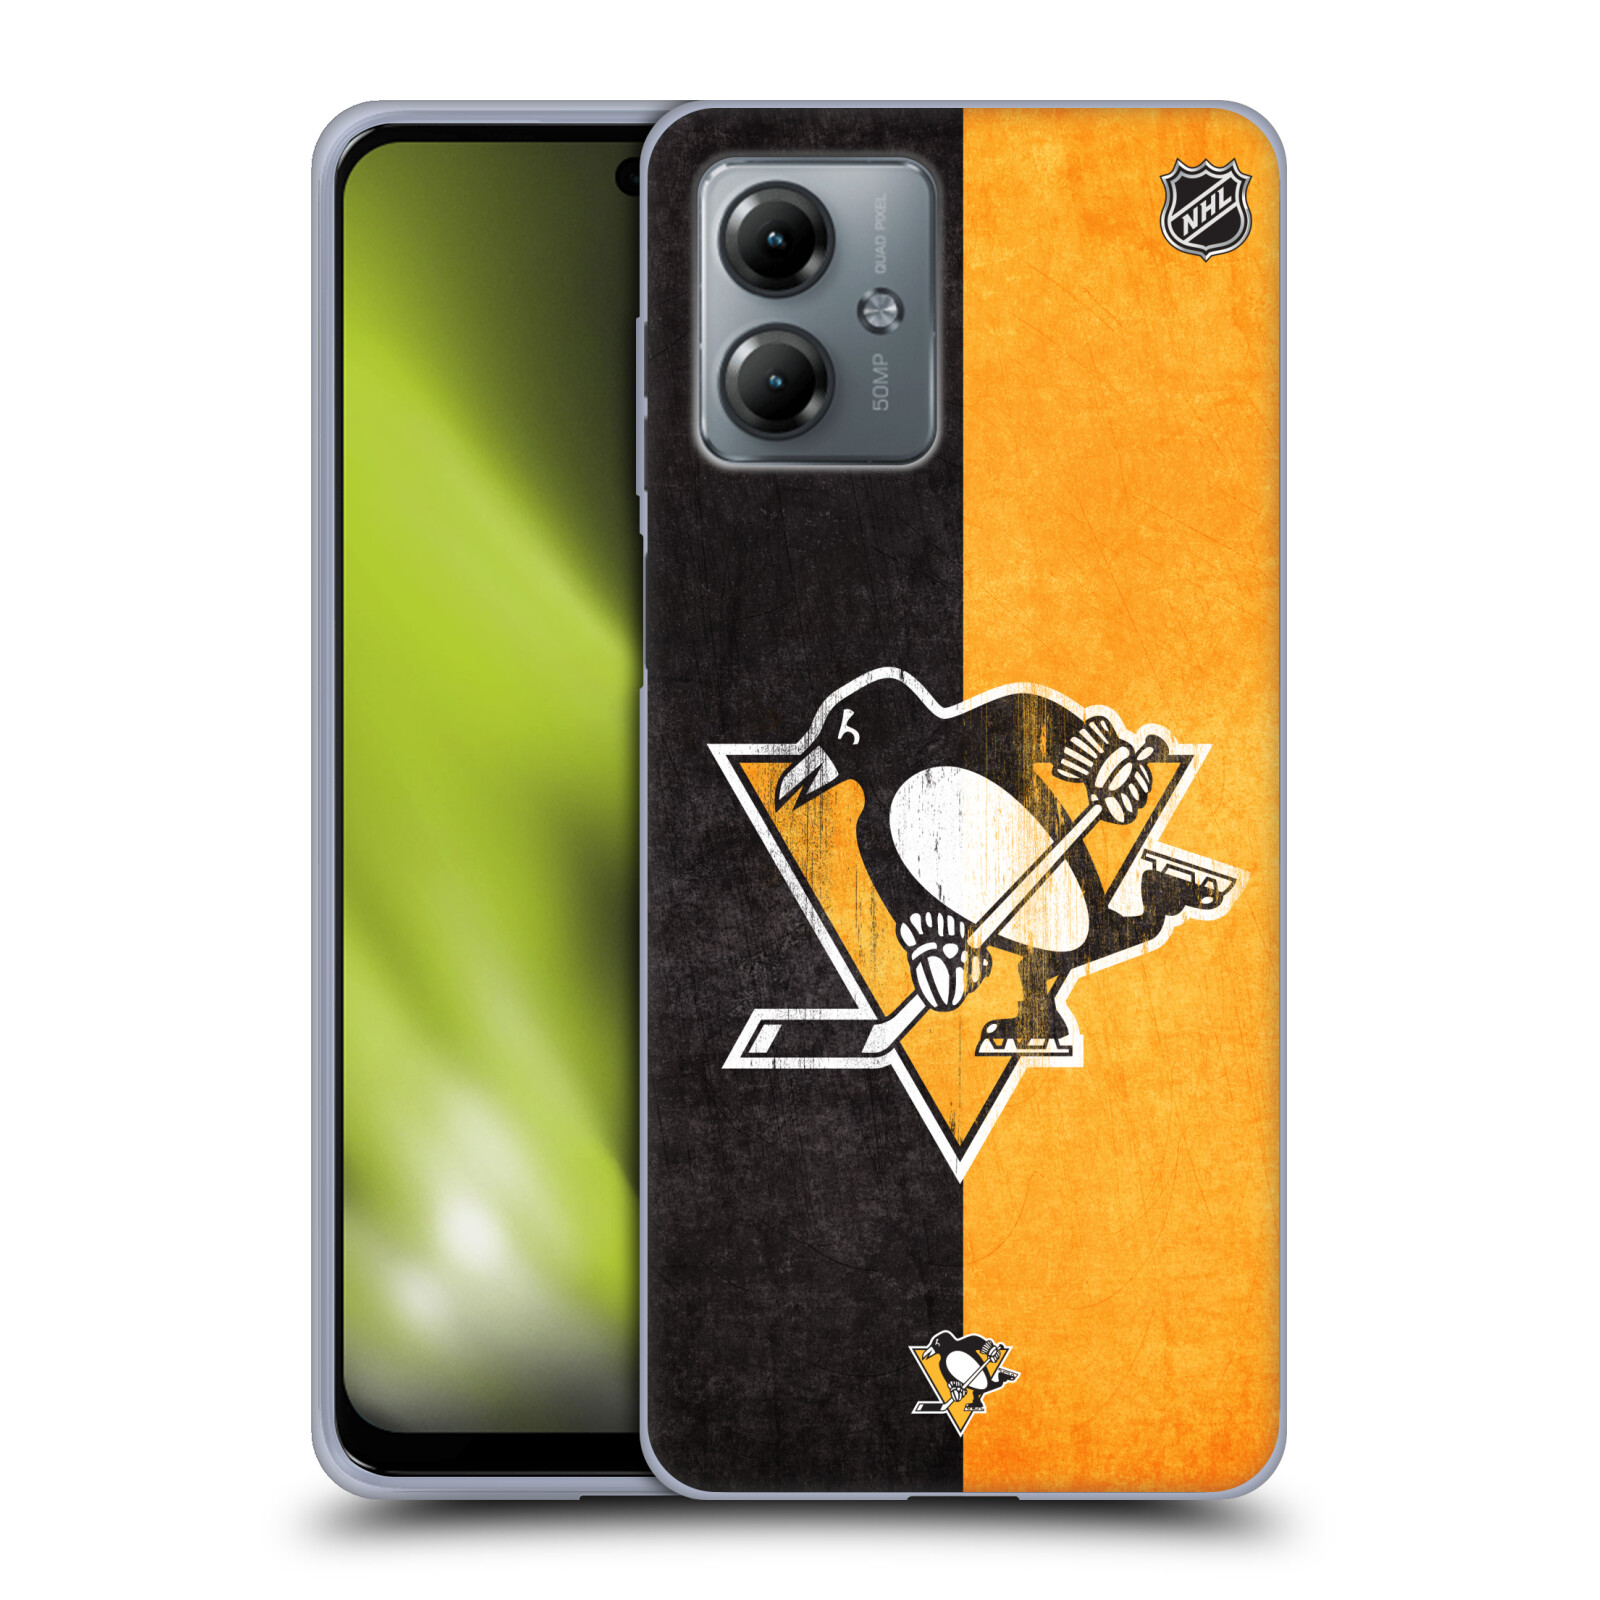 Silikonové pouzdro na mobil Motorola Moto G14 - NHL - Půlené logo Pittsburgh Penguins (Silikonový kryt, obal, pouzdro na mobilní telefon Motorola Moto G14 s licencovaným motivem NHL - Půlené logo Pittsburgh Penguins)